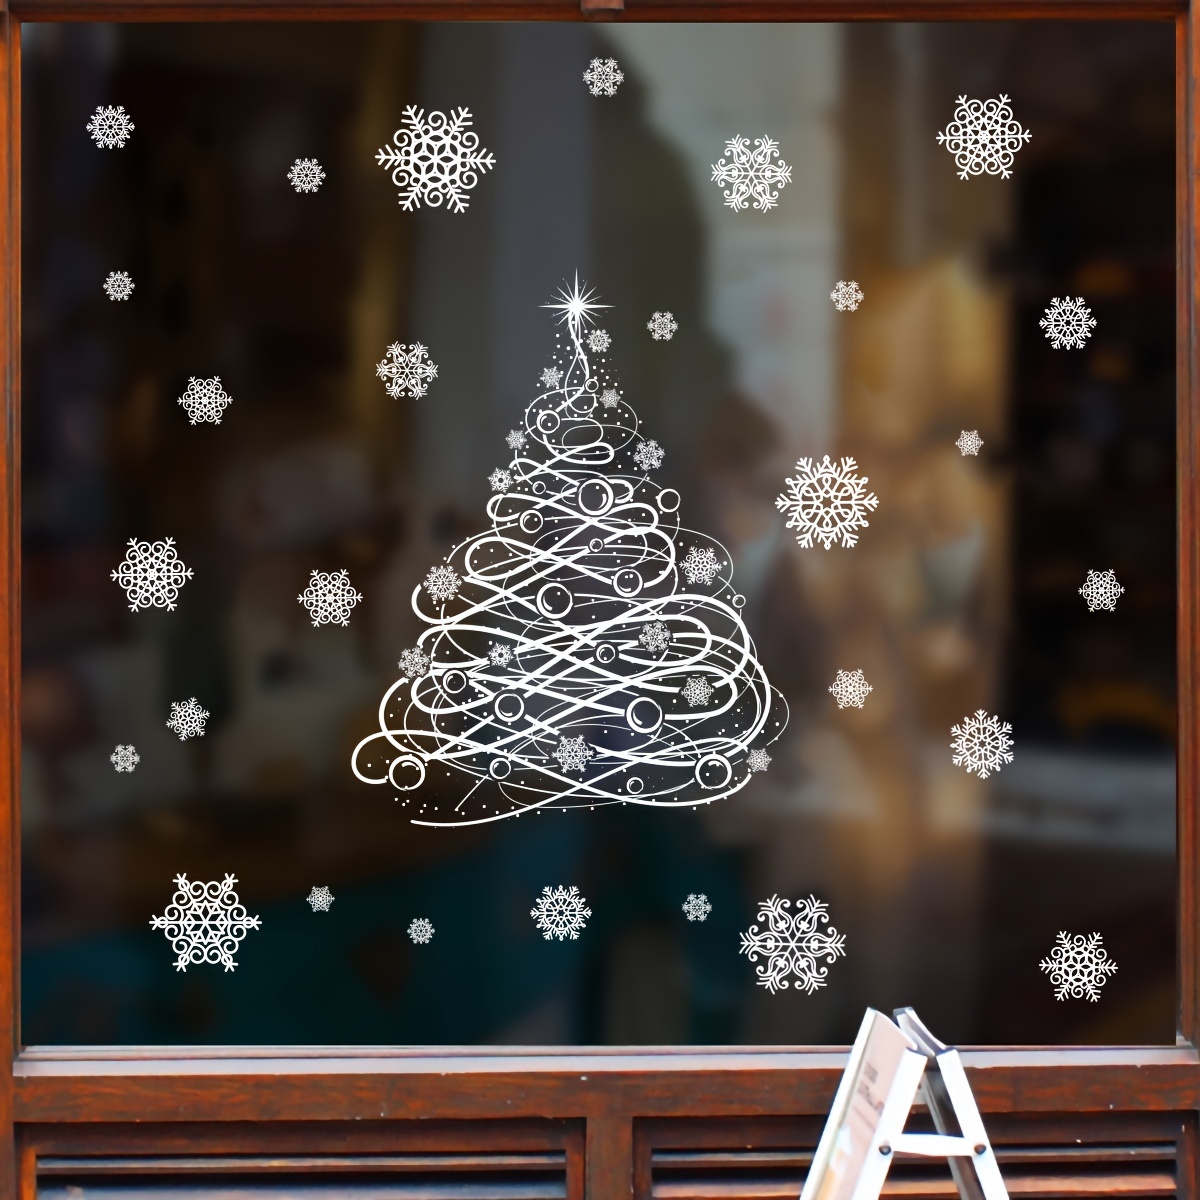 Autocollants grande fenêtre de Noël blanche flocons de neige Wapiti  autocollants arbre de Noël famille Navidad